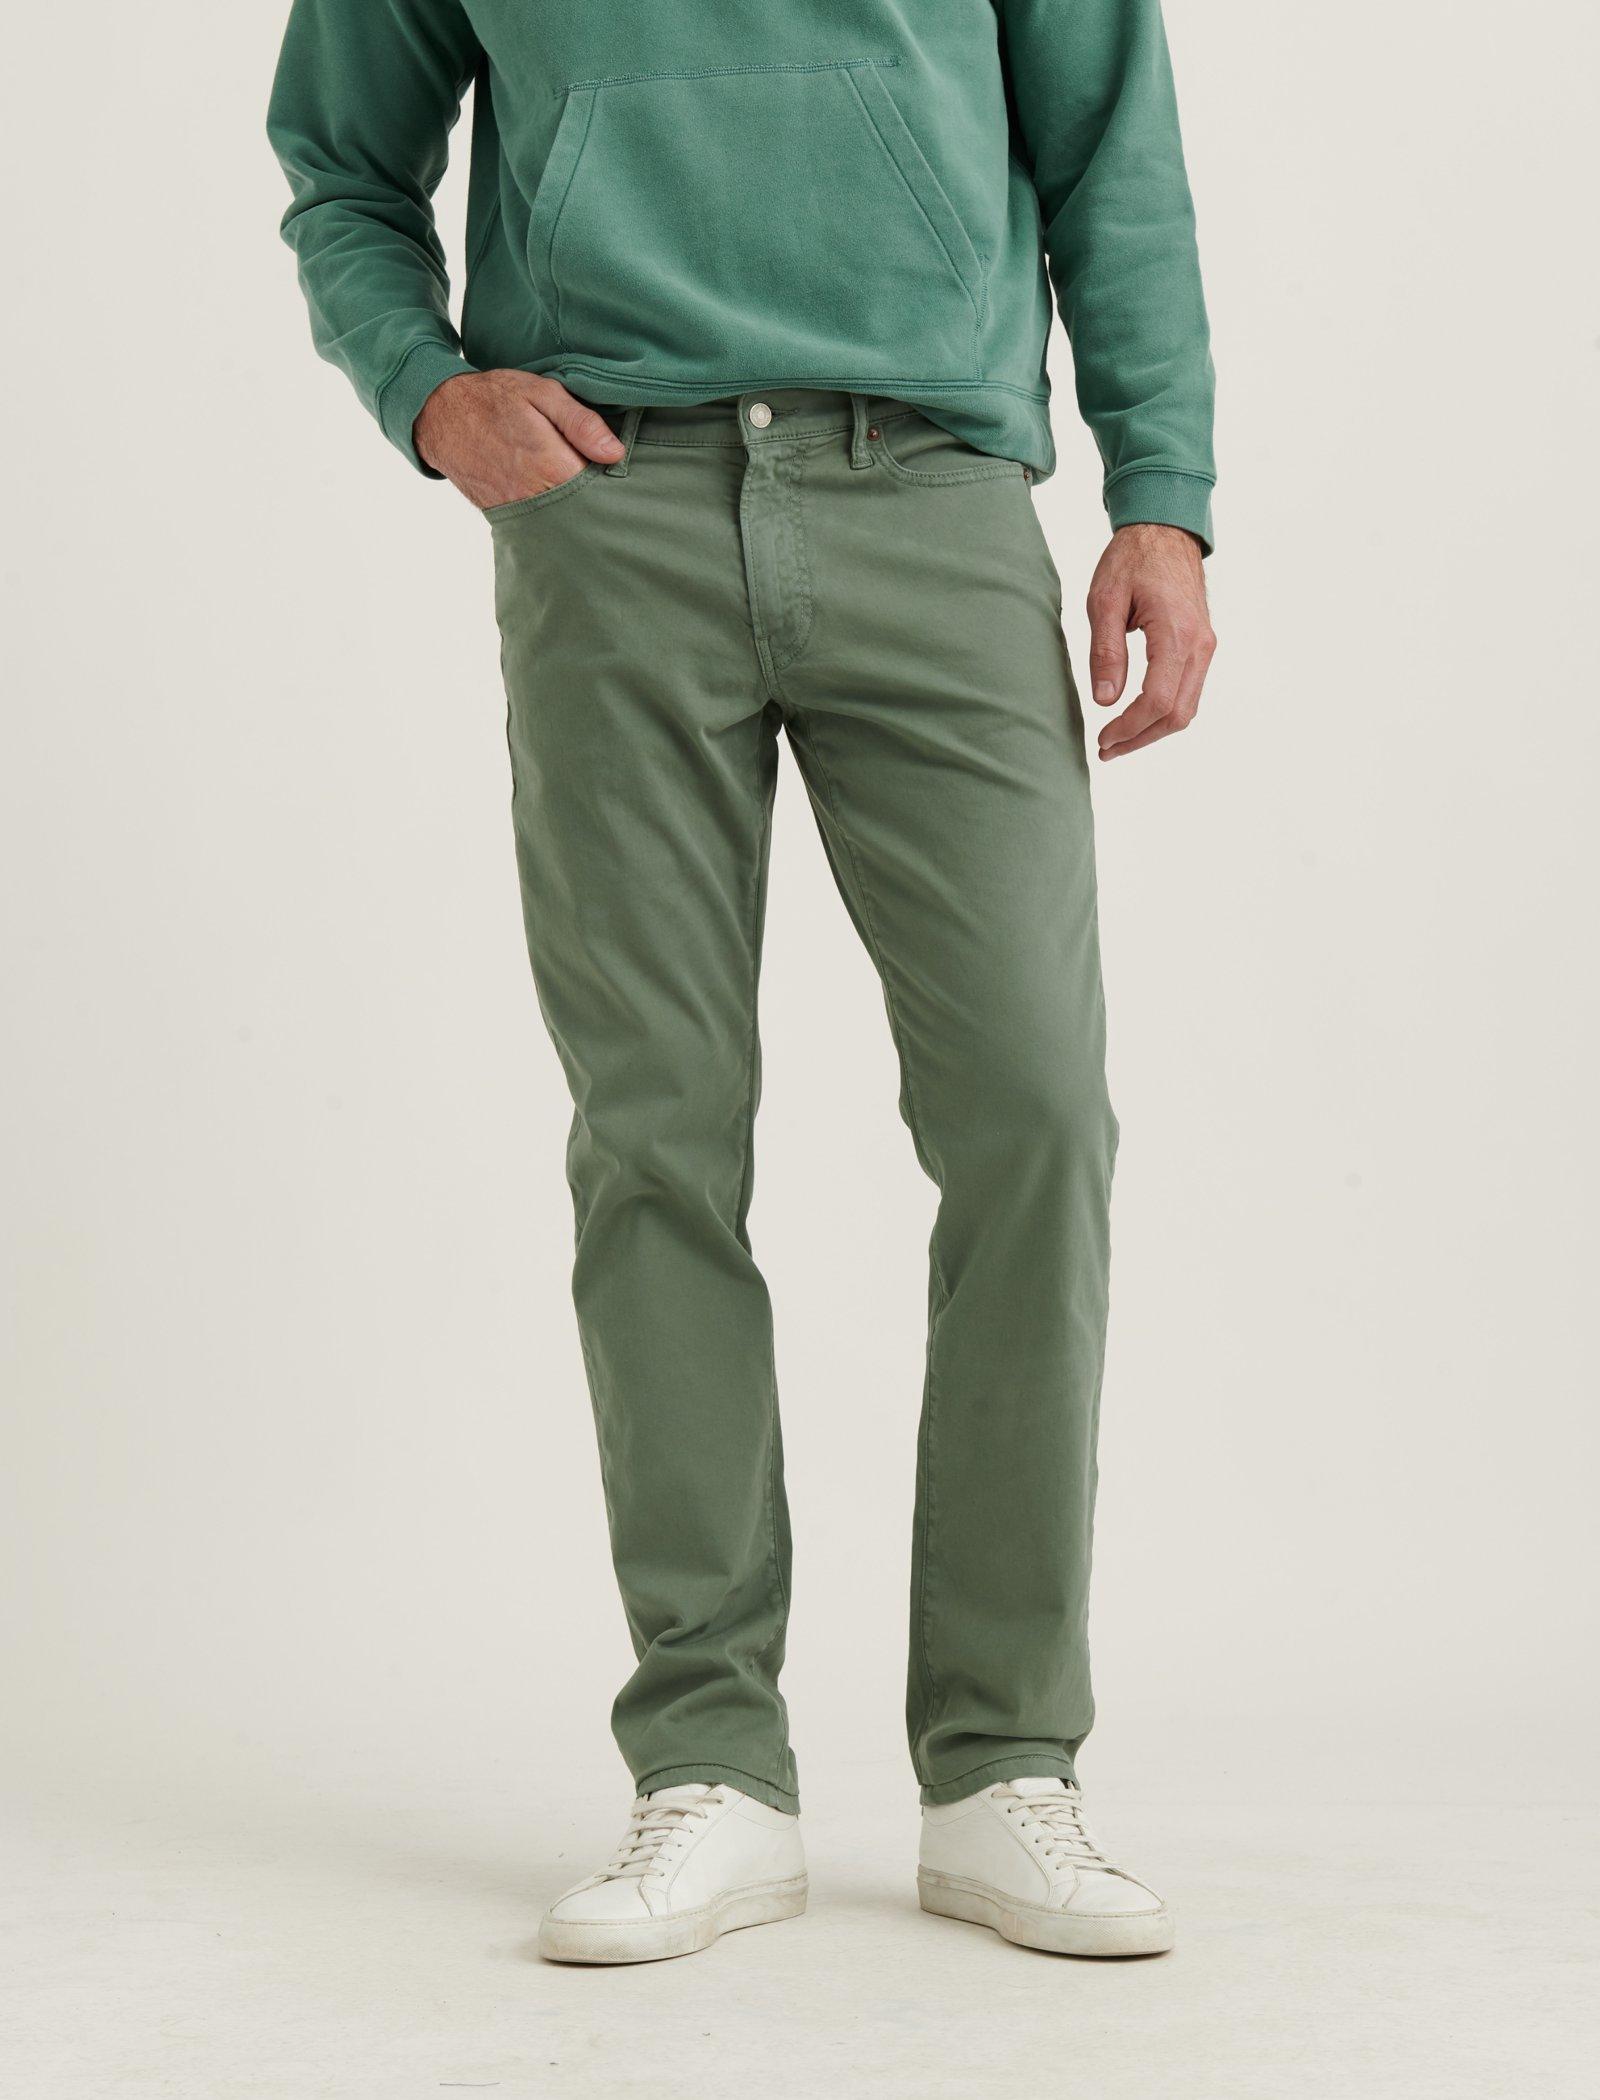 lucky brand green pants